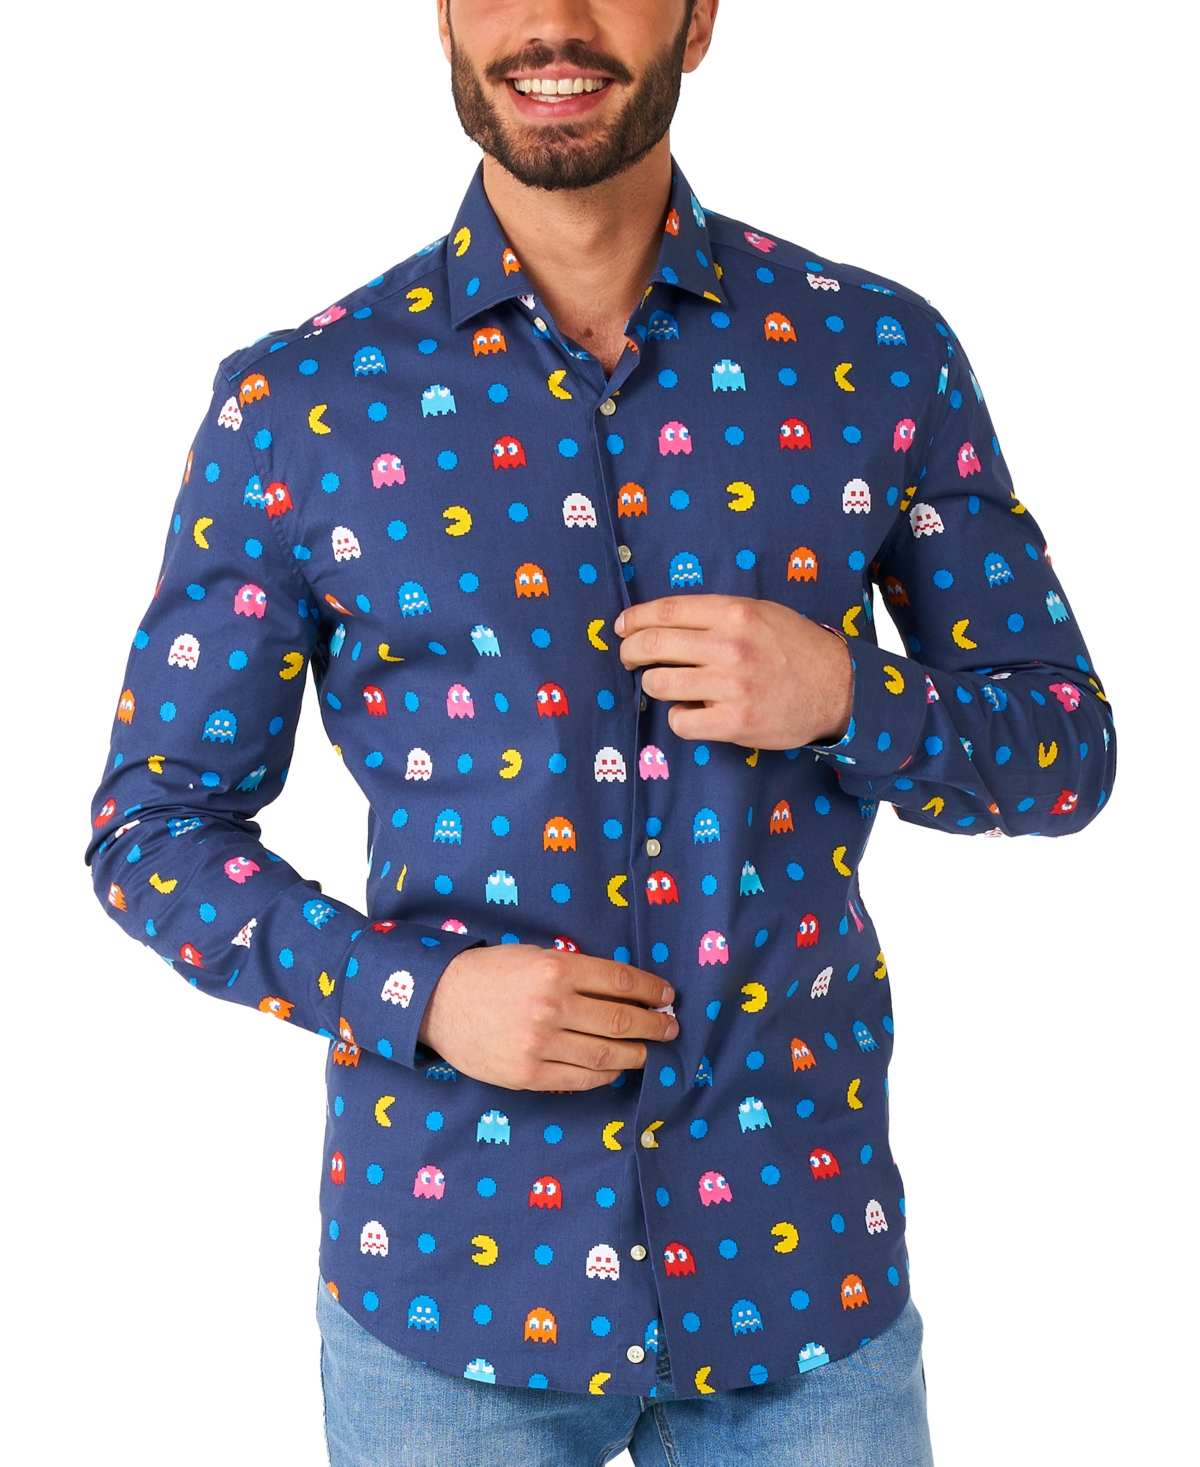 Men's Long-Sleeve Pac-Man Graphic Shirt - Blue